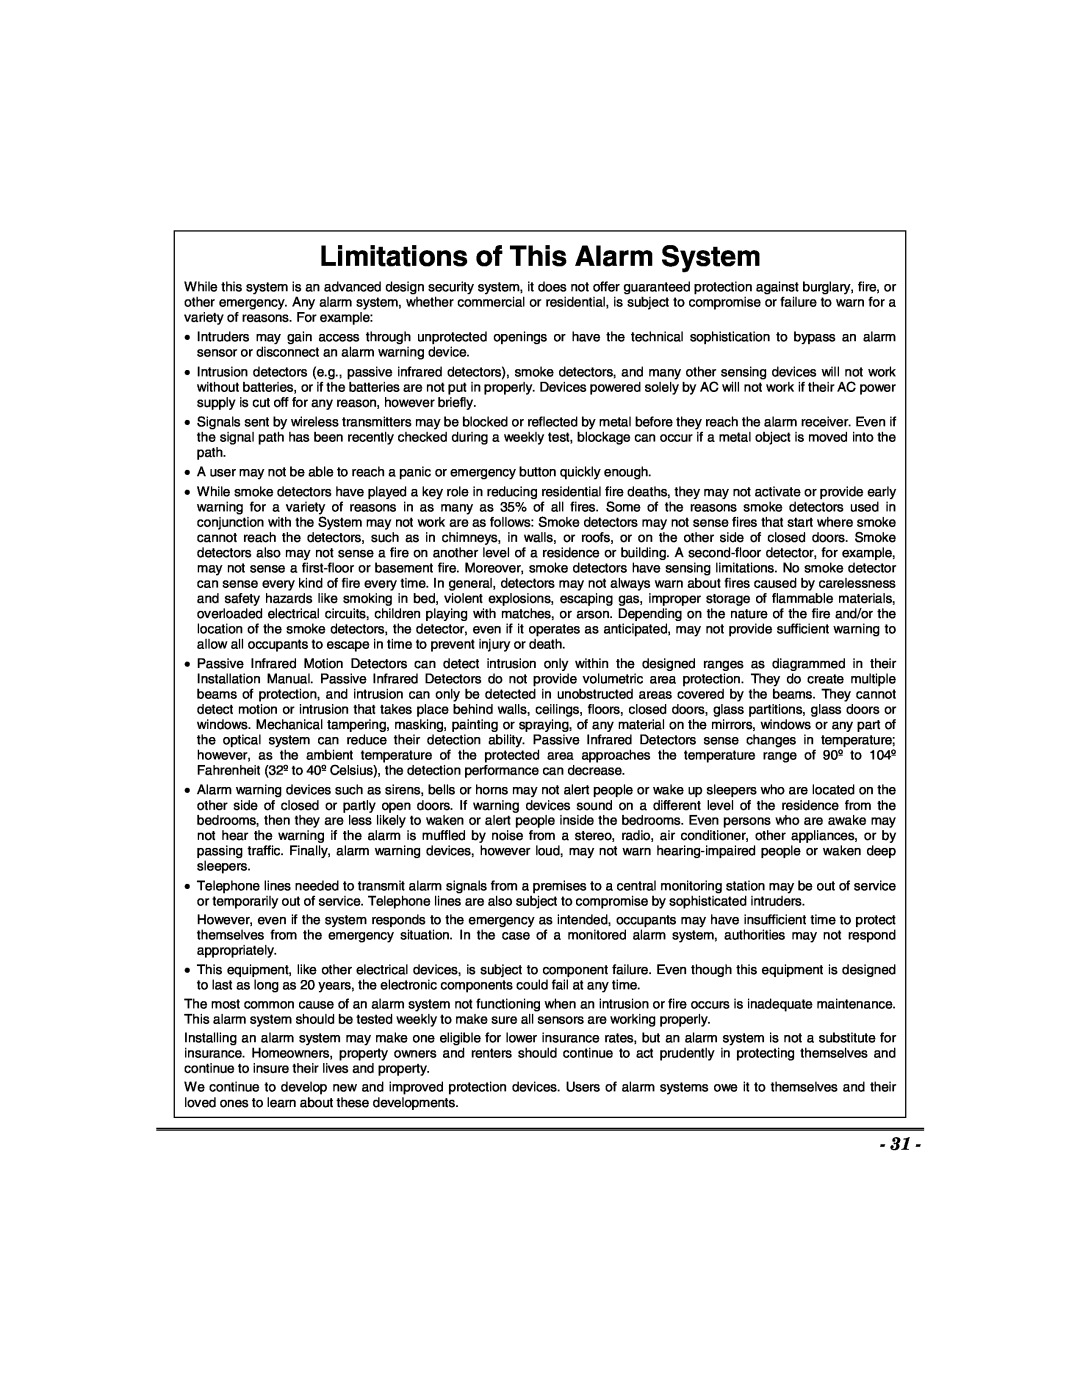 Honeywell 848, 400, 600, 624 manual Limitations of This Alarm System 